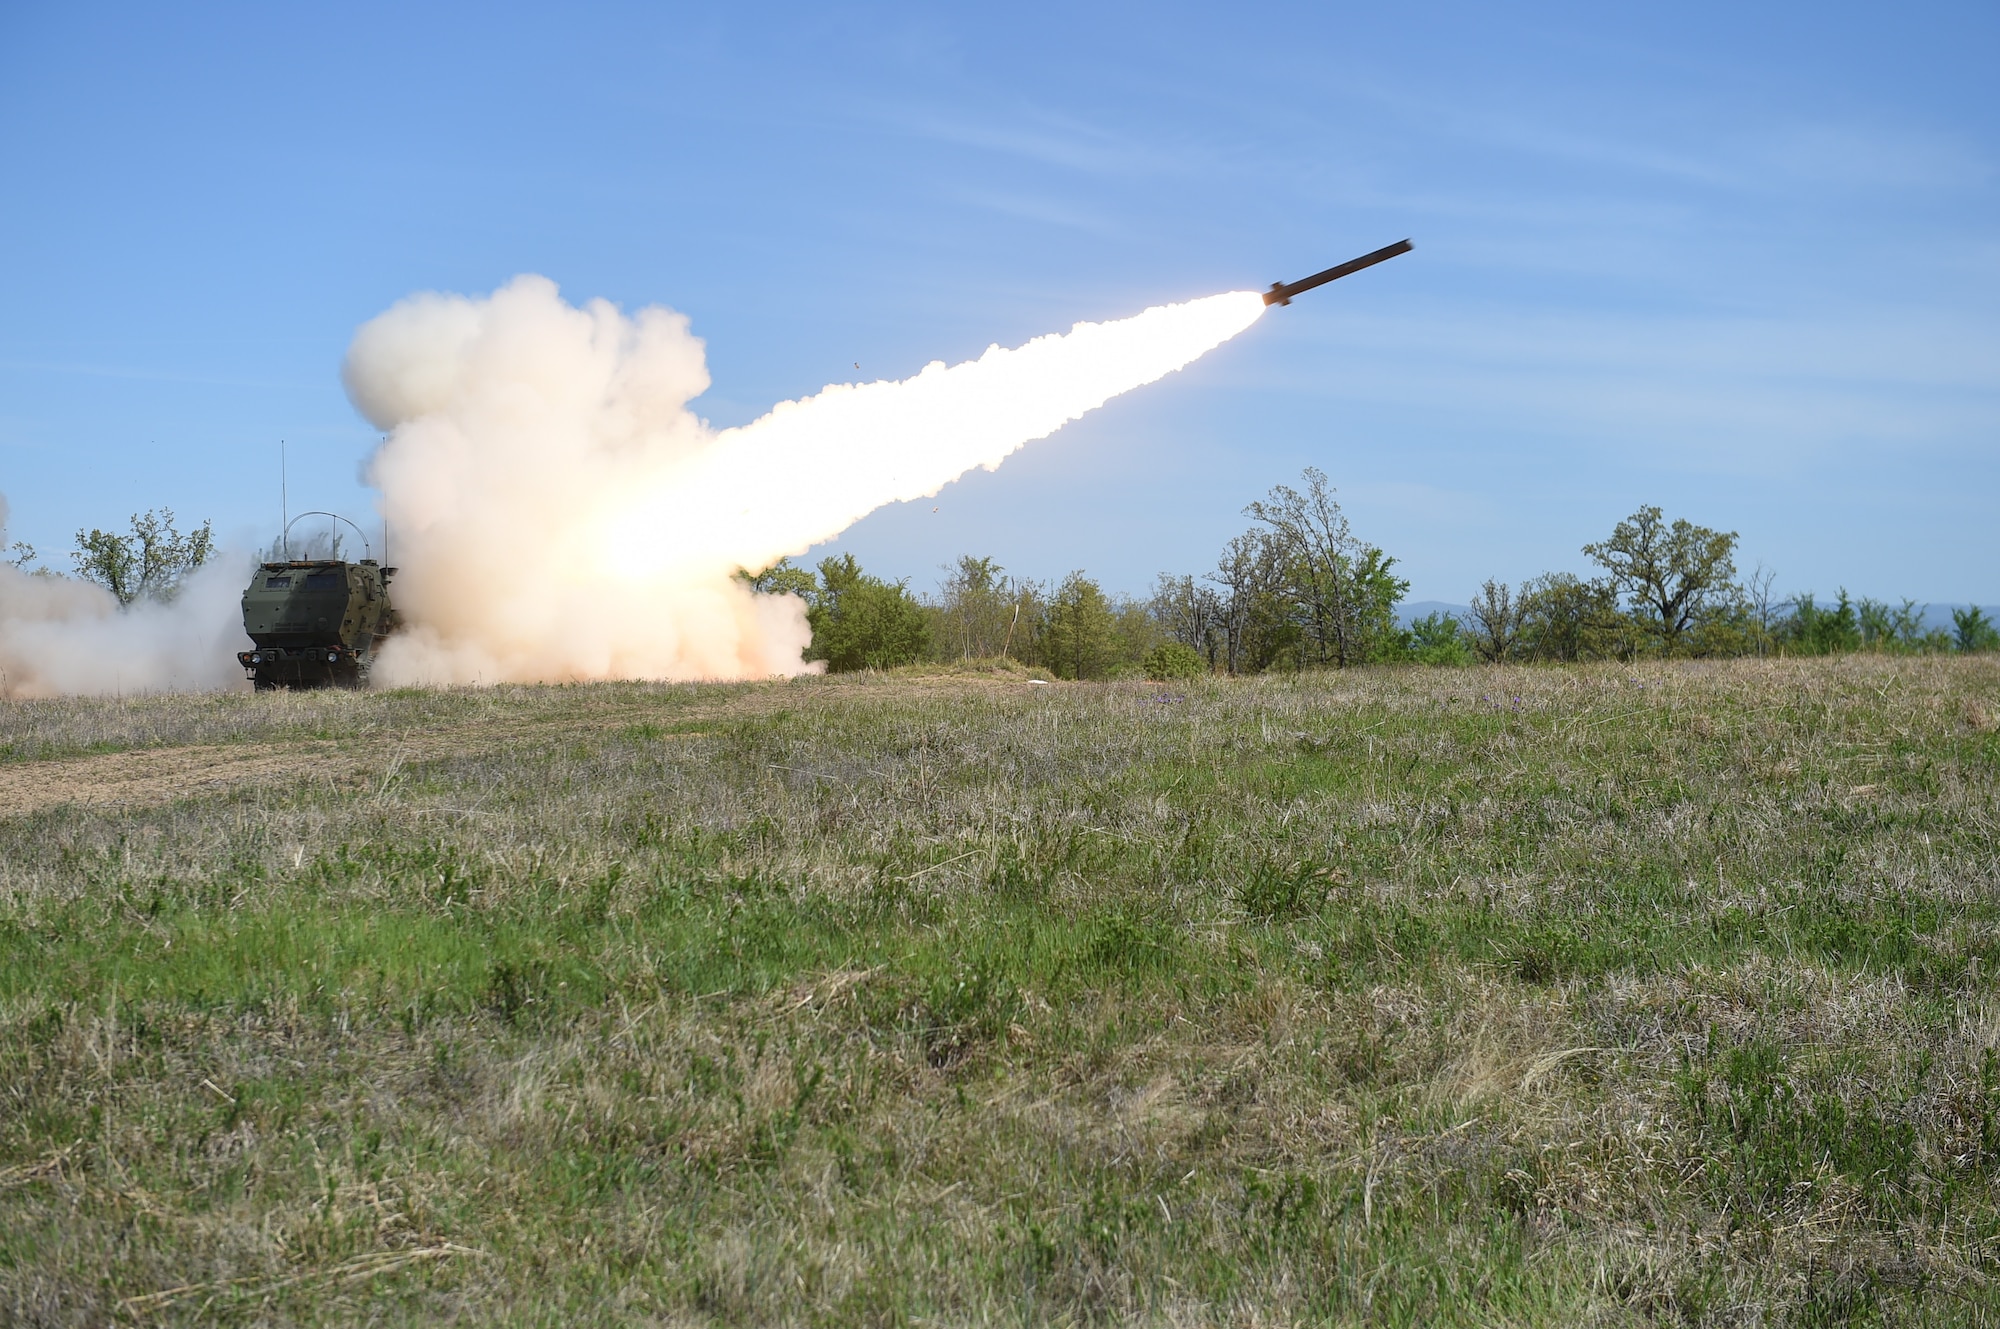 A High Mobility Artillery Rocket fires a rocket